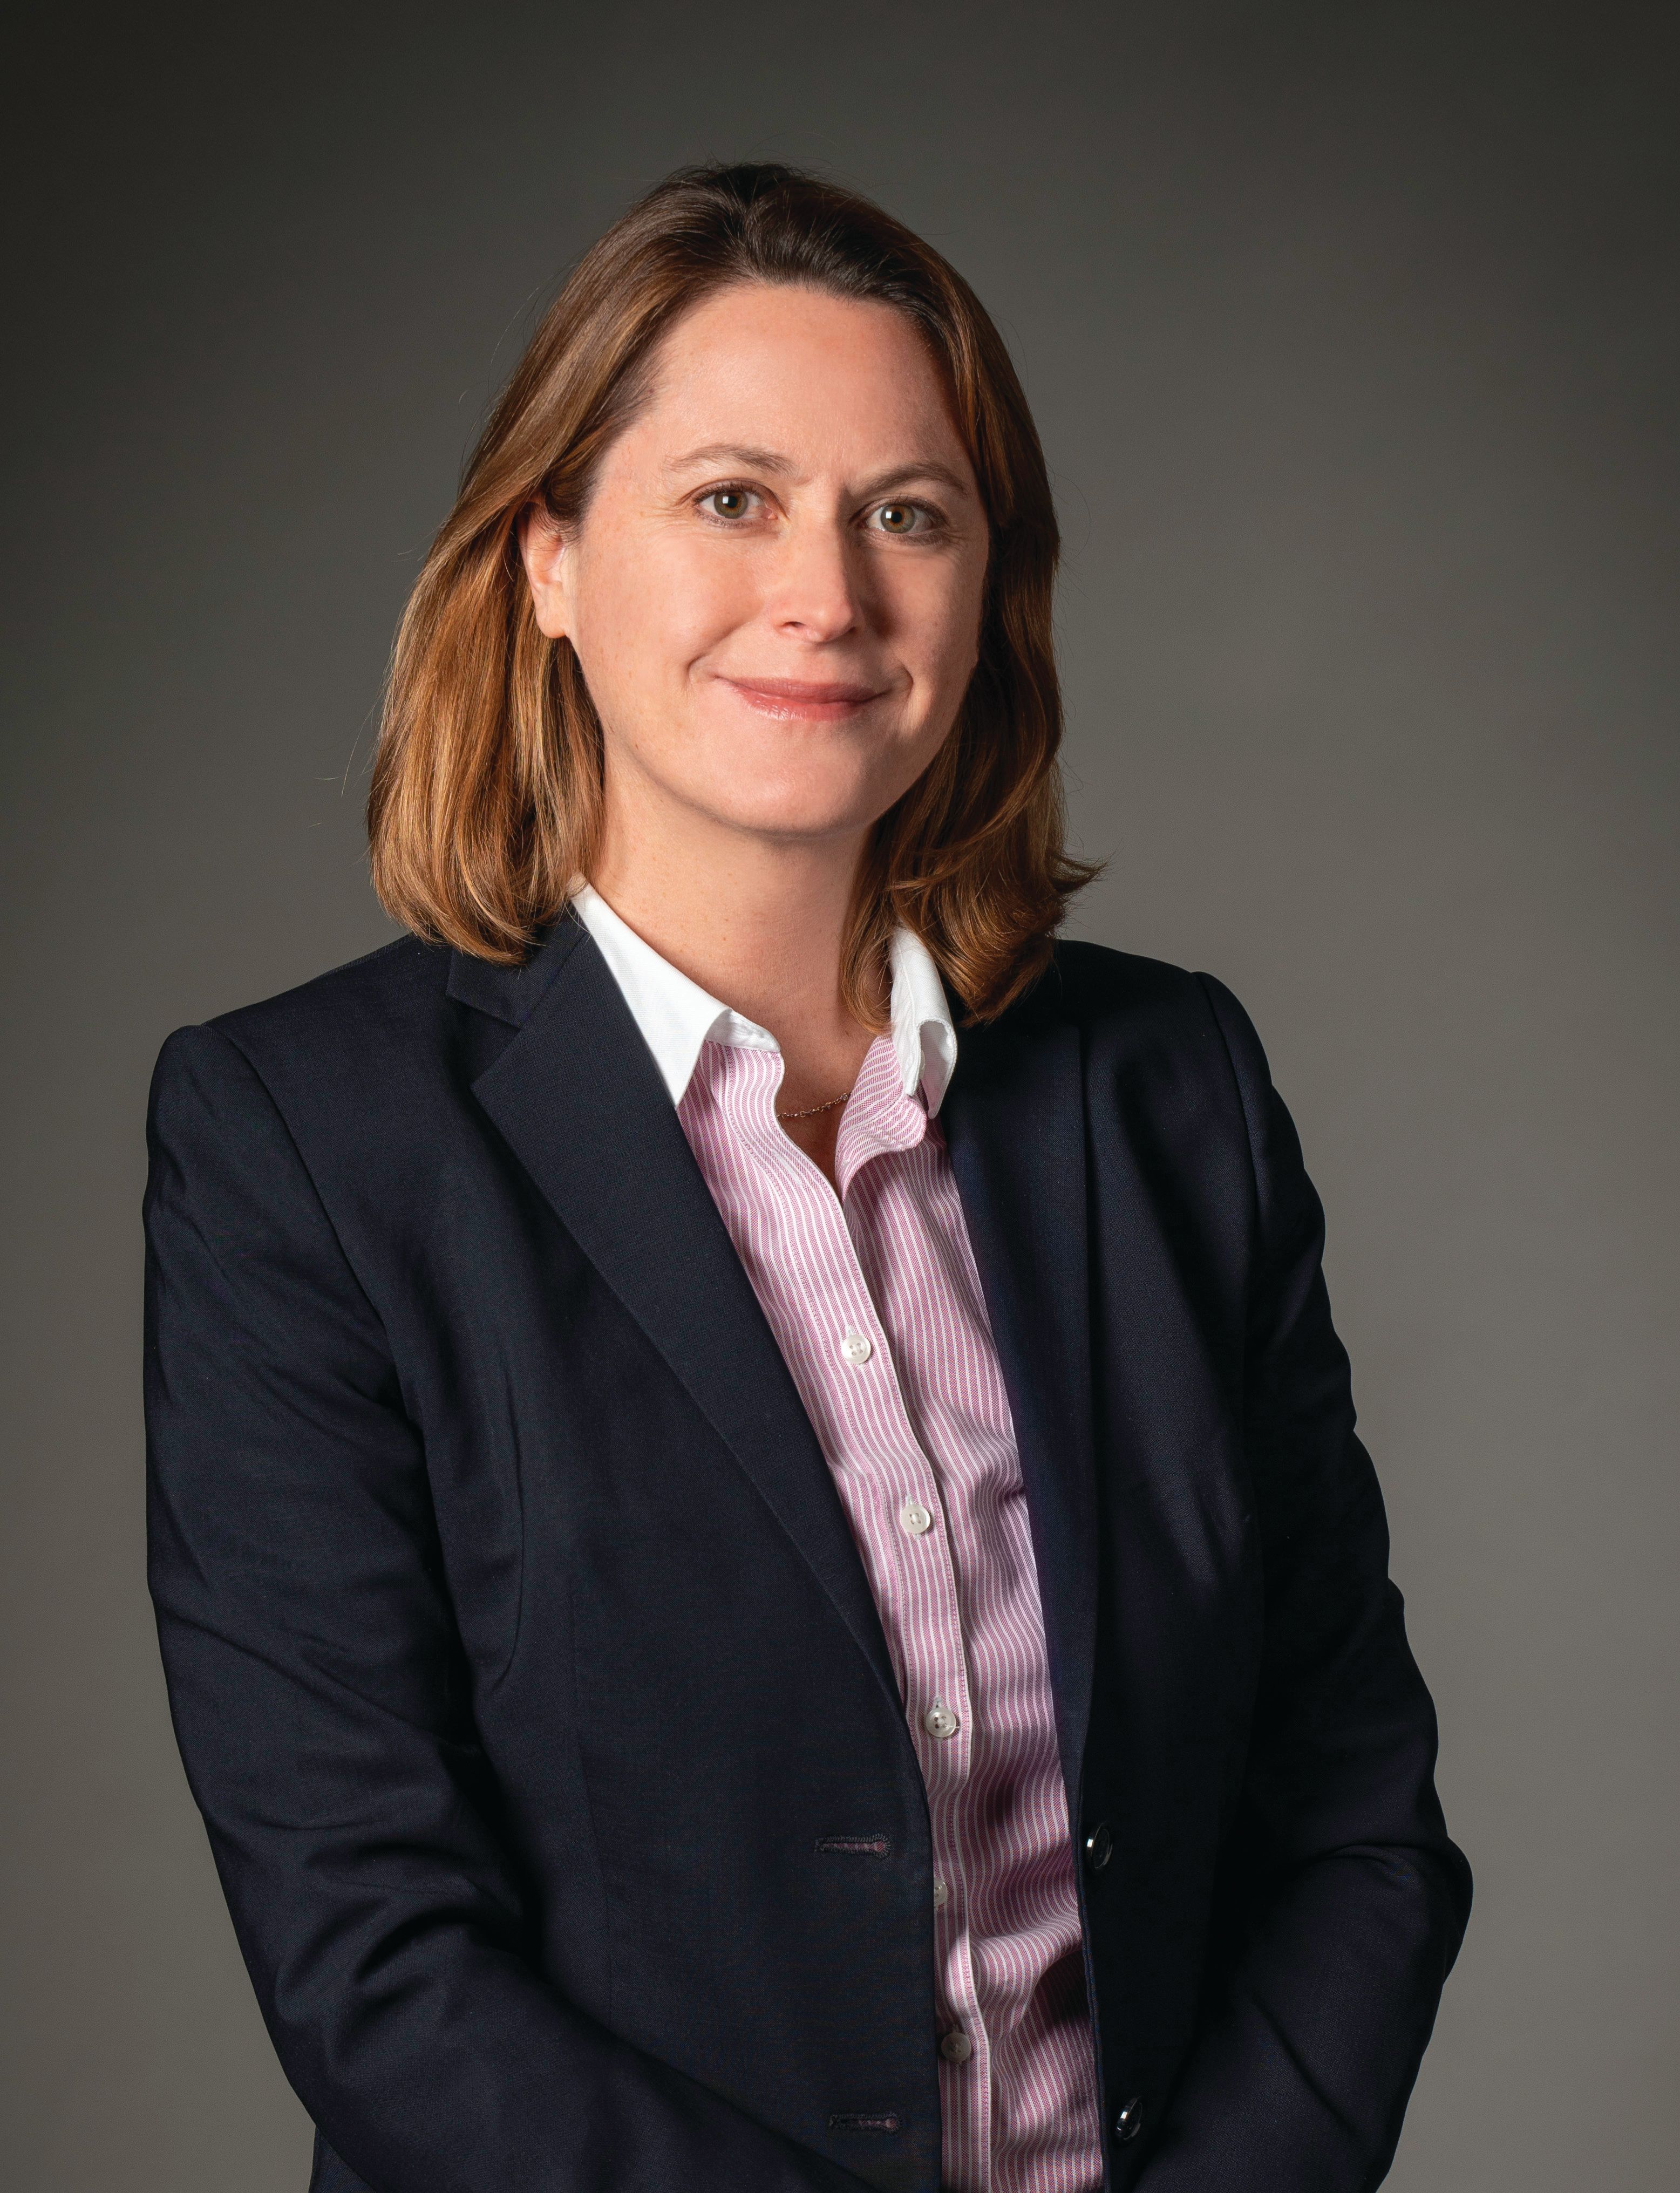 Monika Fleckenstein, MD, professor of ophthalmology at John A. Moran Eye Center at the University of Utah in Salt Lake City